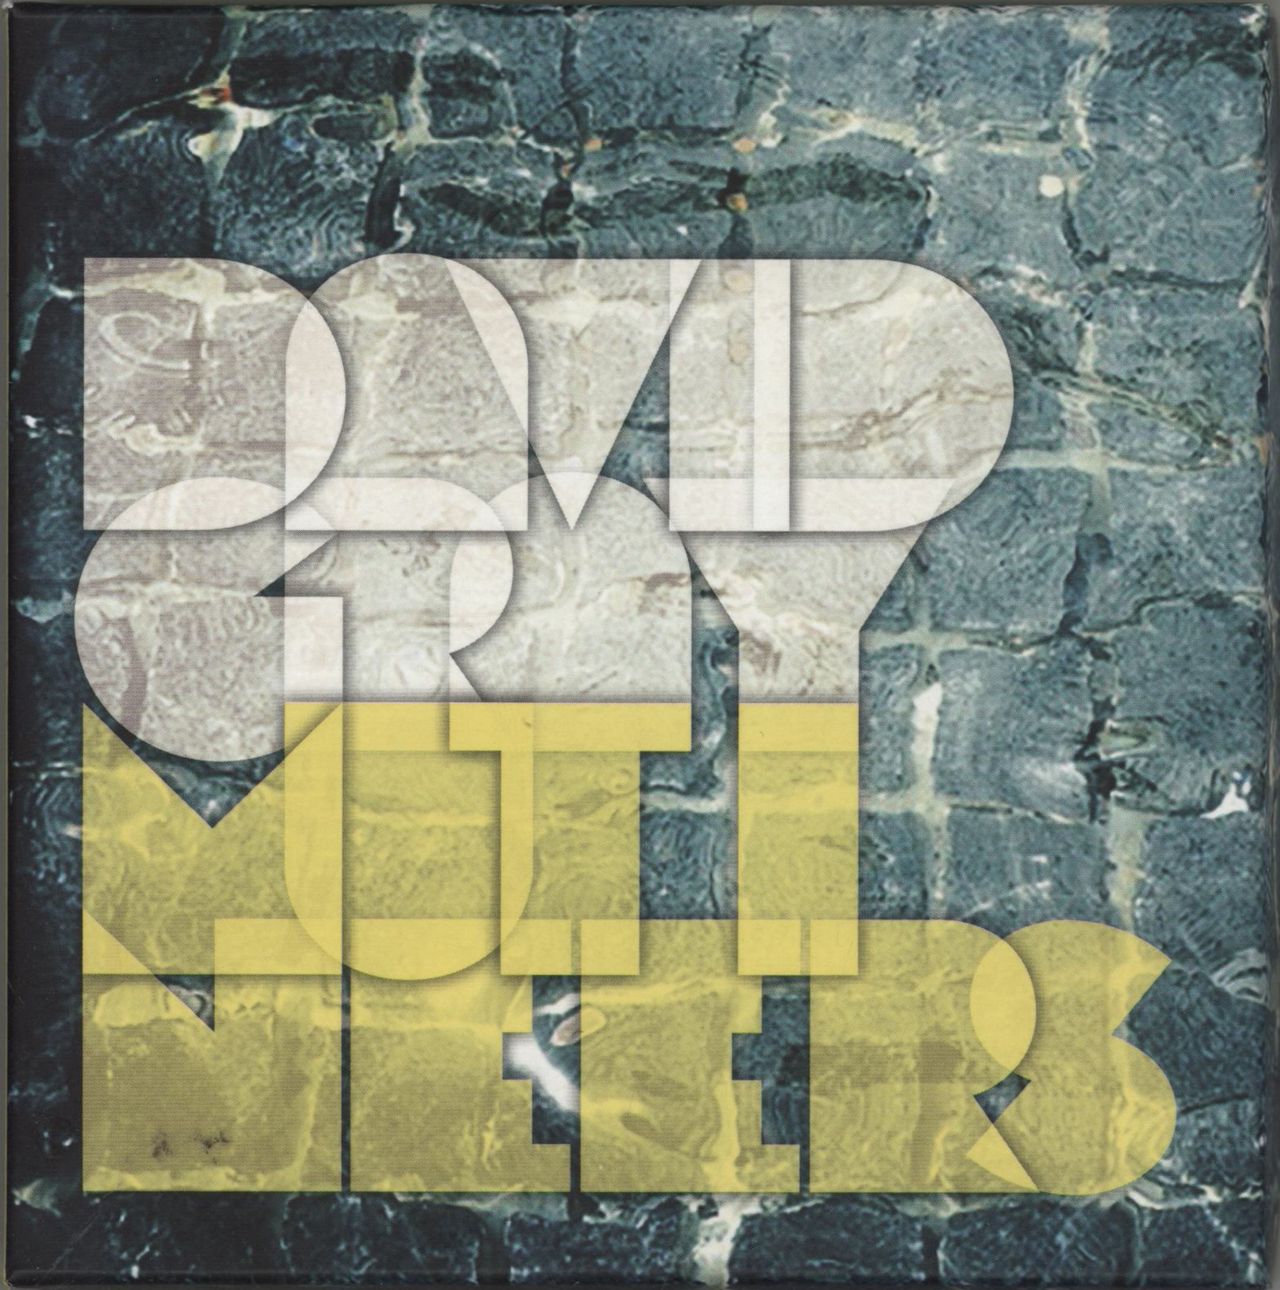 David Gray Mutineers - Deluxe Edition UK 3-CD album set (Triple CD) IHTCDX1403